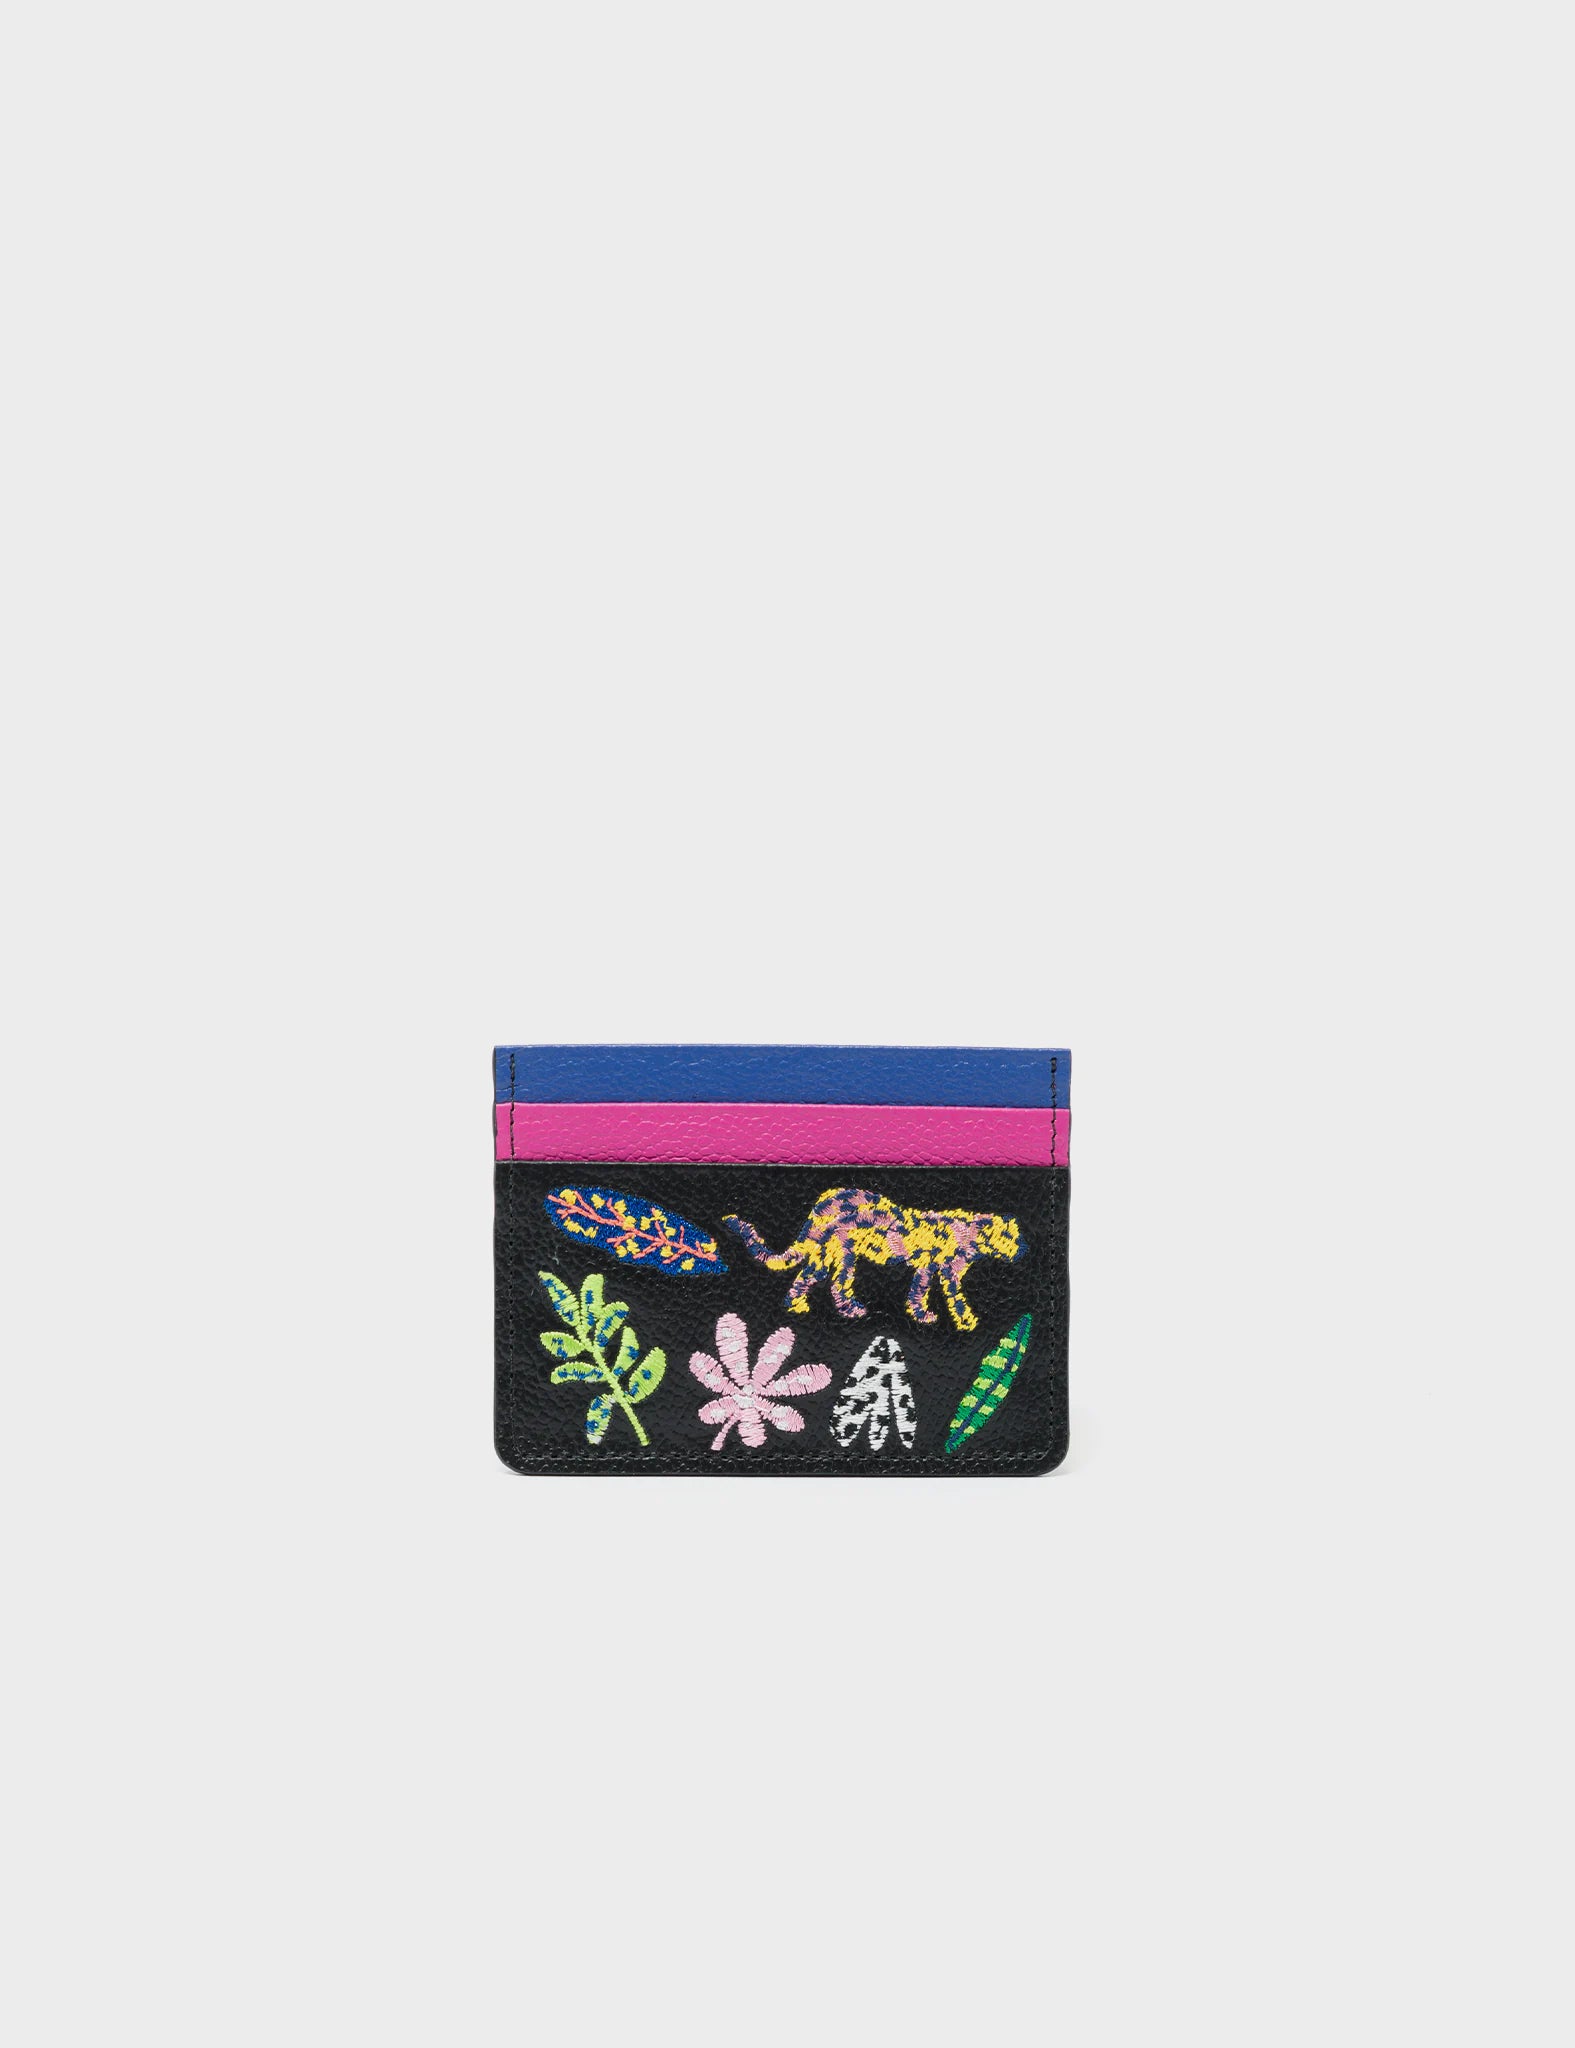 Filium Black and Violet Leather Cardholder - El Trópico Embroidery Design